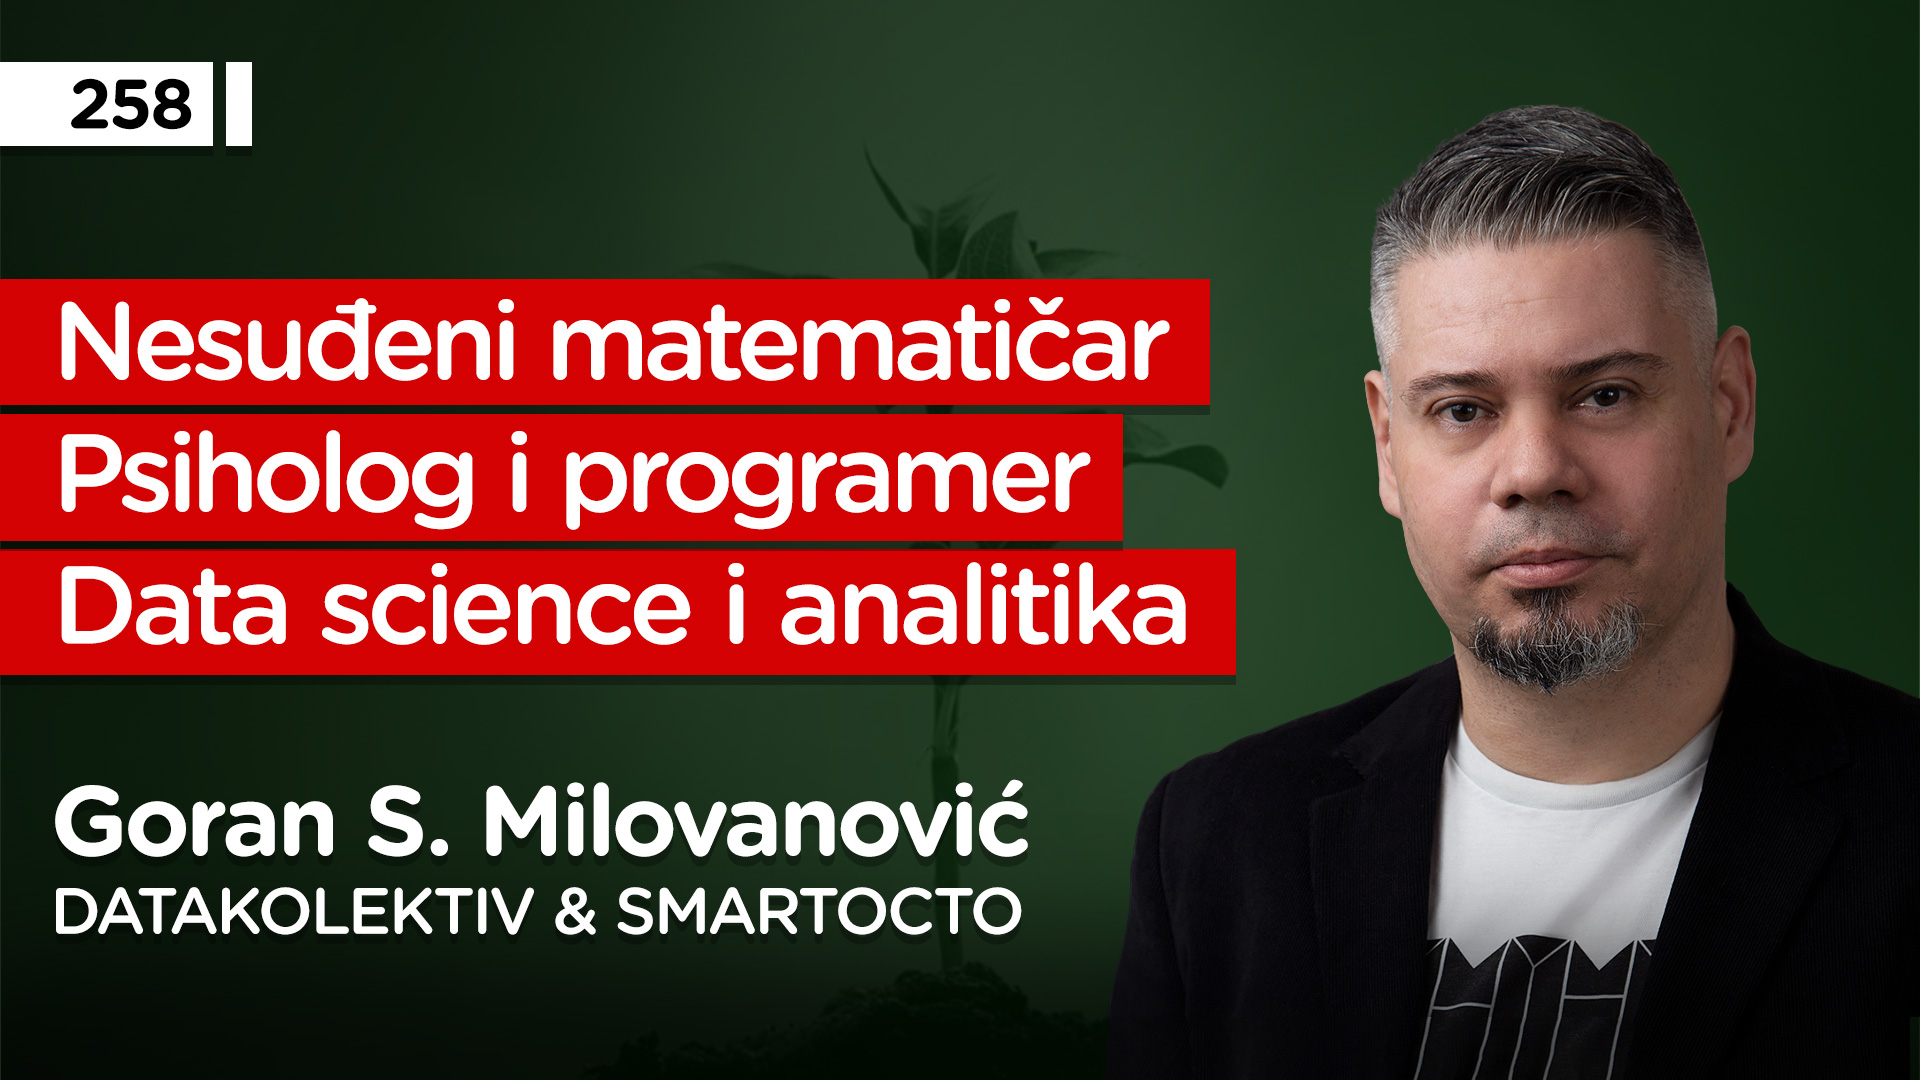 EP258: Goran S. Milovanović